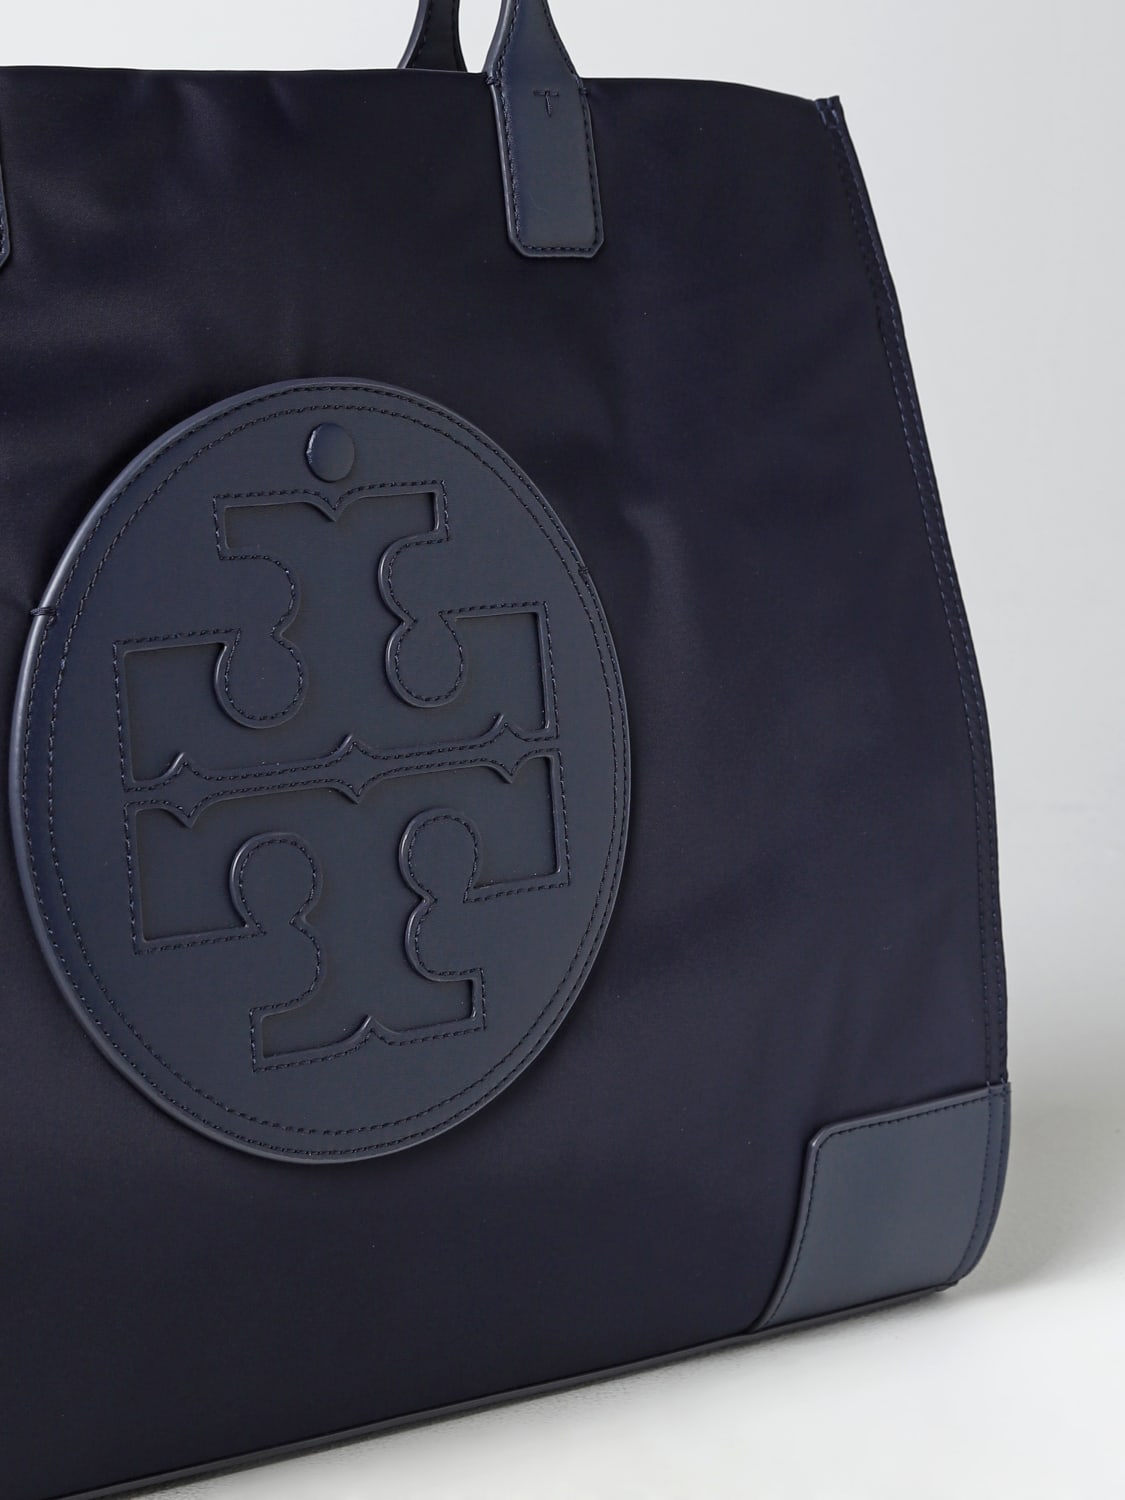 TORY BURCH: Ella Tote bag in nylon - Blue  Tory Burch tote bags 87116  online at